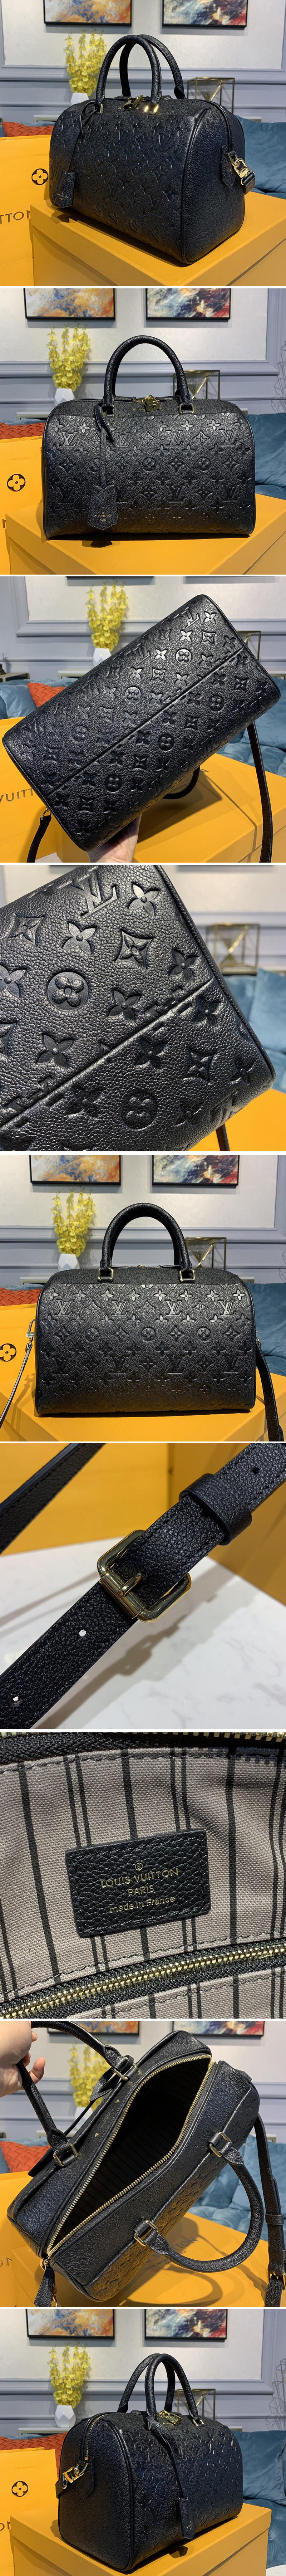 Replica Louis Vuitton M42406 Speedy Bandouliere 30 handbag in Black Monogram Empreinte leather